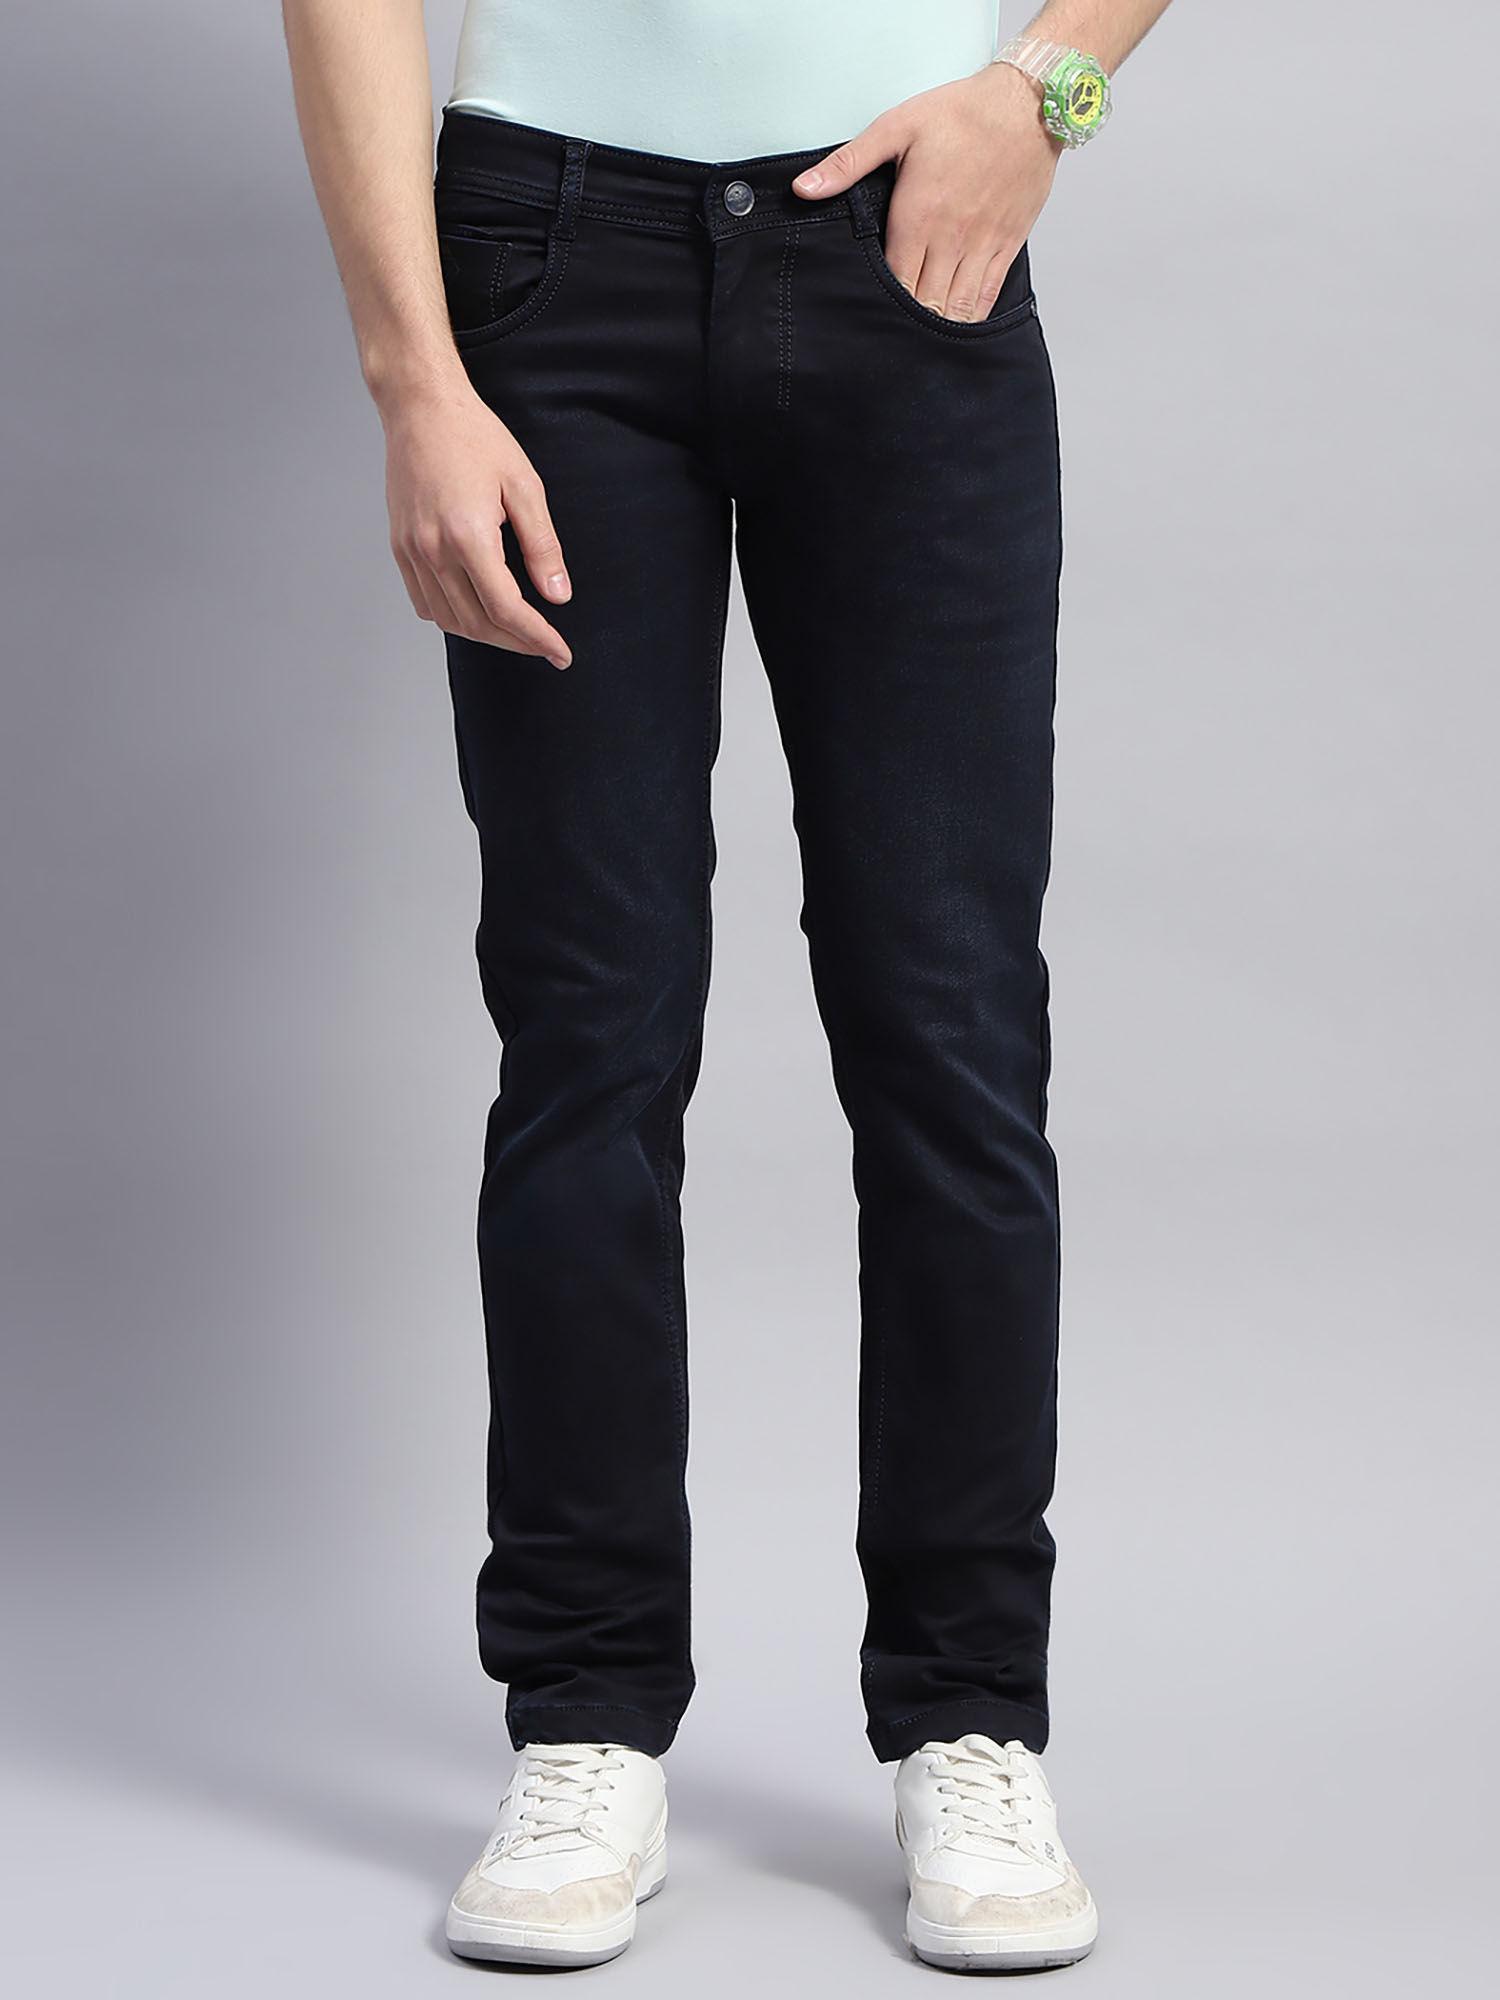 mens-solid-dark-blue-skinny-fit-casual-jeans